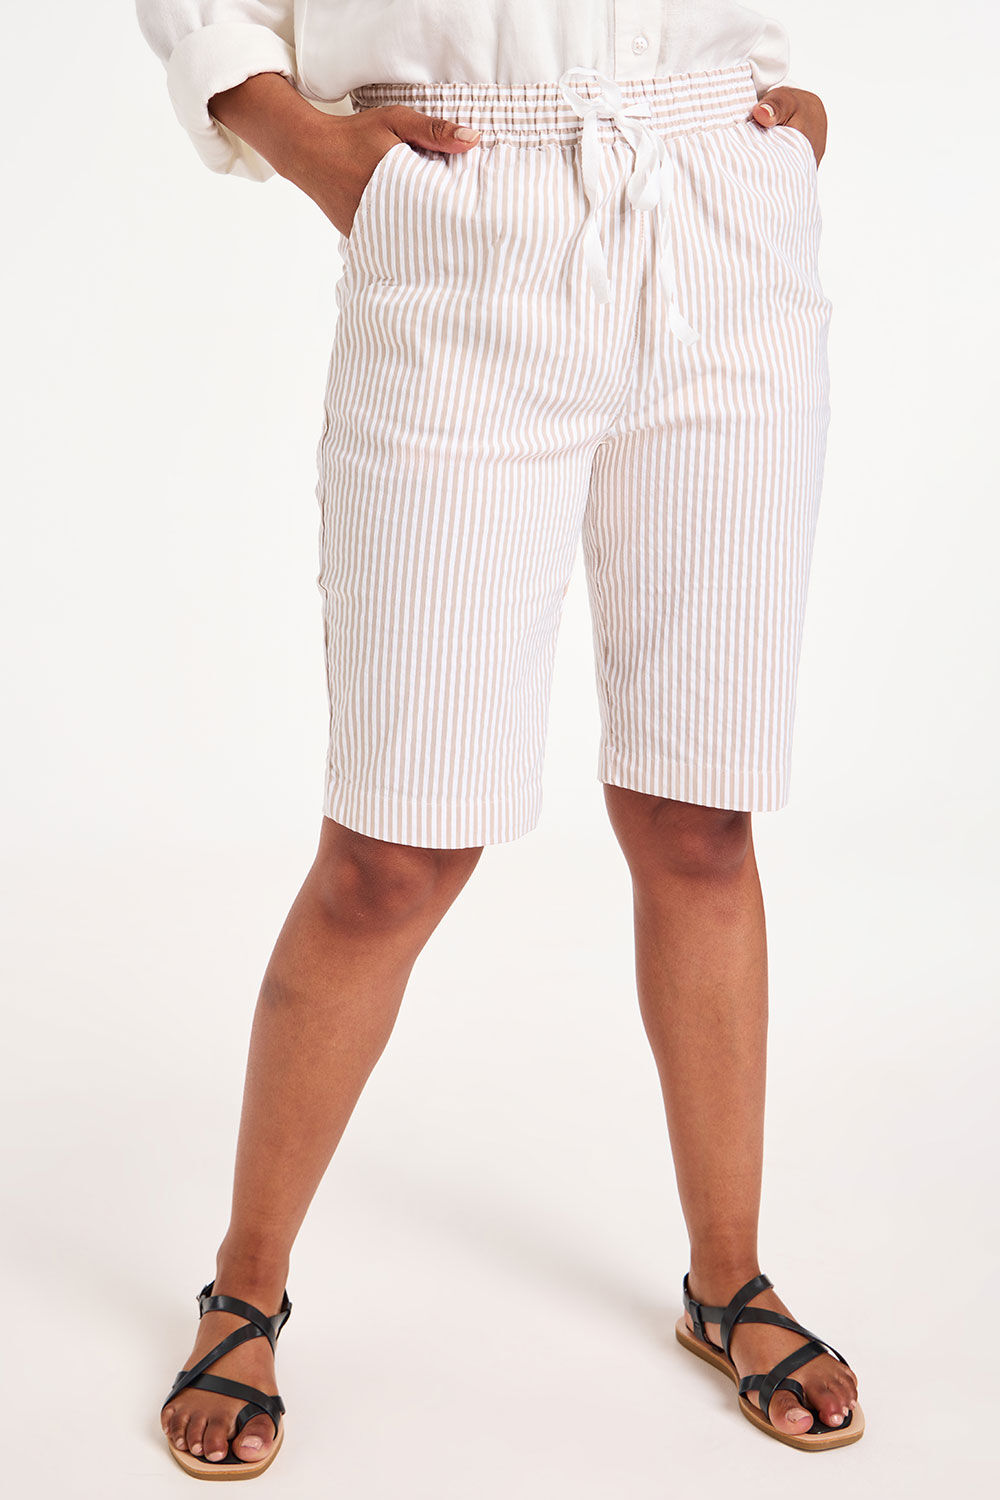 Bonmarche Stone Striped Elasticated Shorts, Size: 22